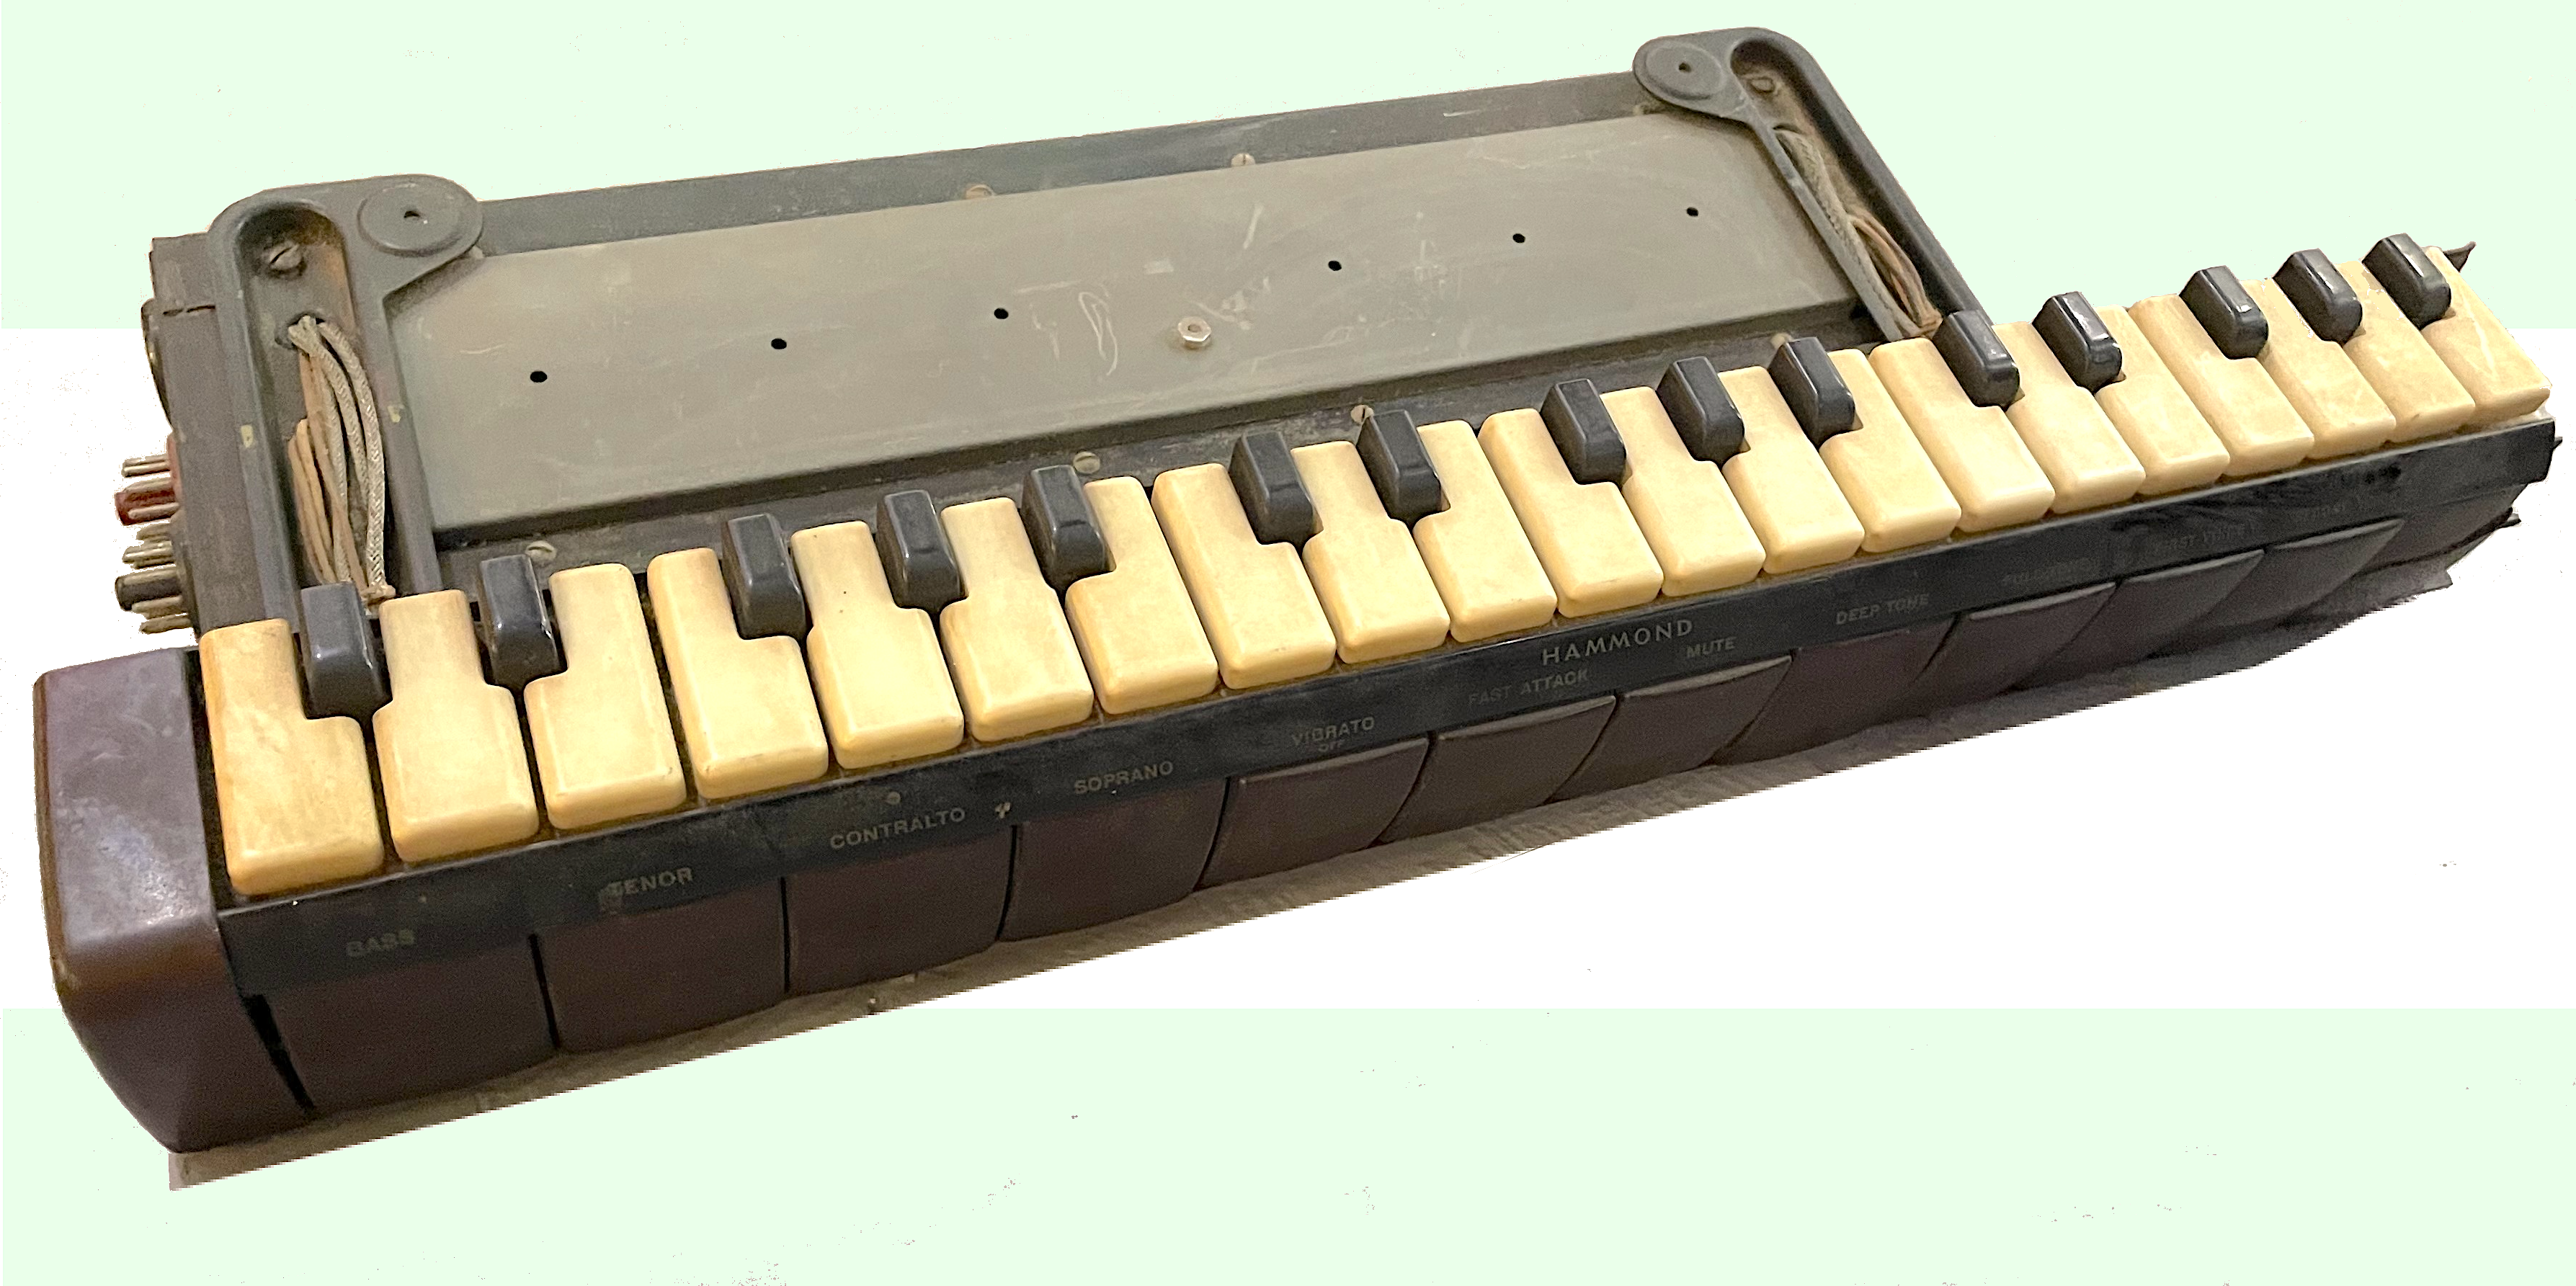 Hammond Organ Company, est. 1928